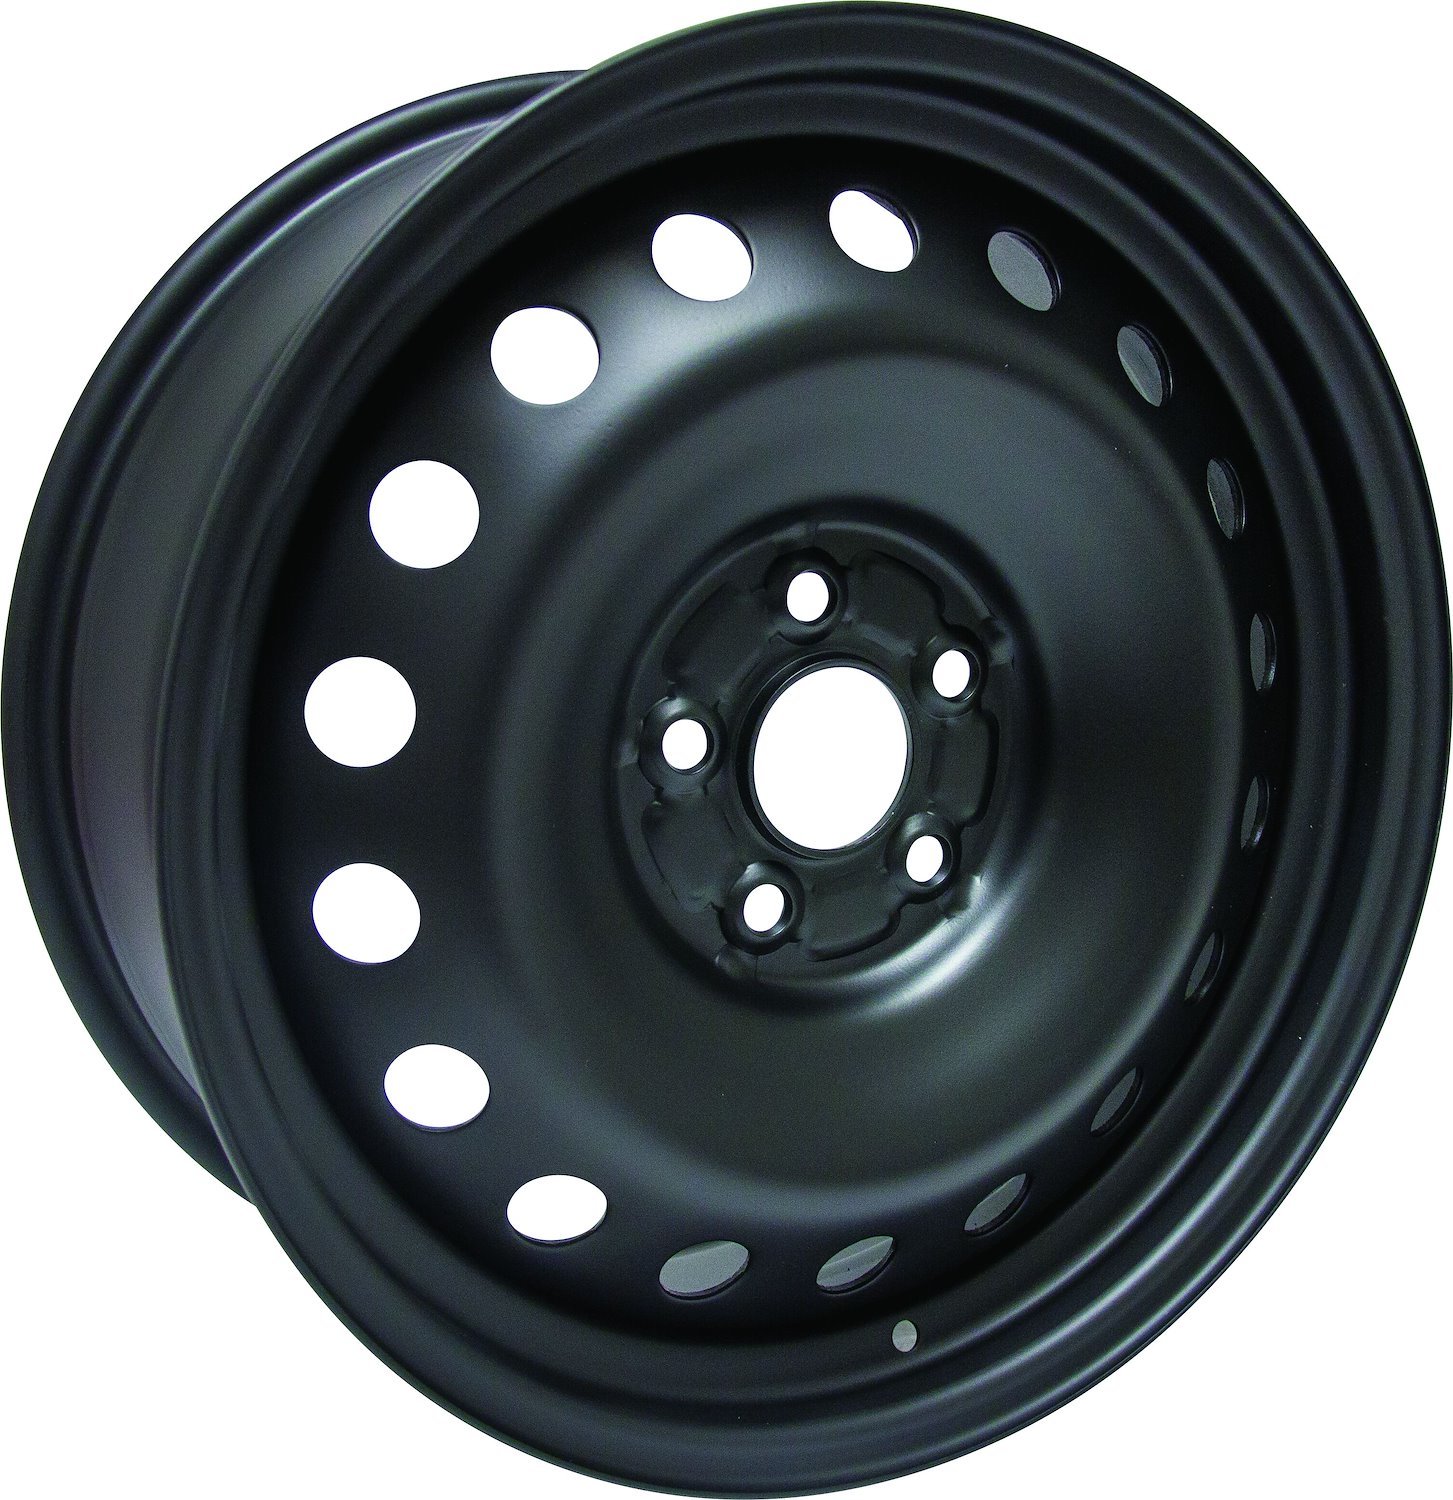 X48563 Steel Wheel [Size: 18" x 7.50"] Black Finish